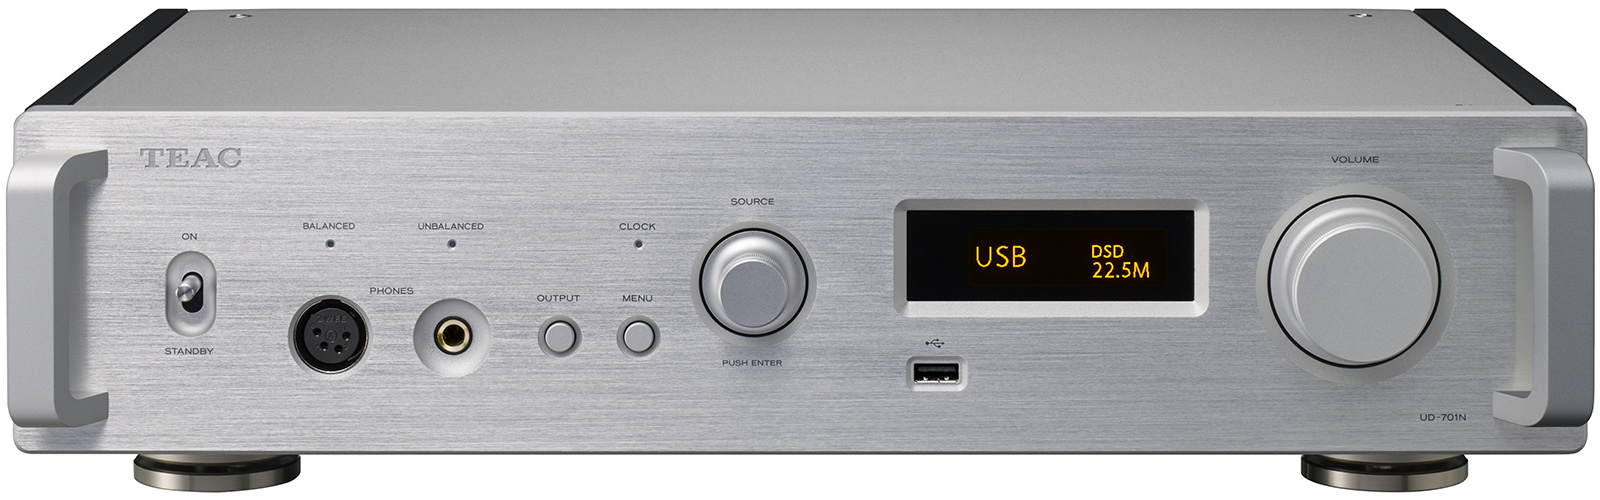 Сетевые аудио проигрыватели Teac UD-701N silver сетевые аудио проигрыватели rose rs250a silver